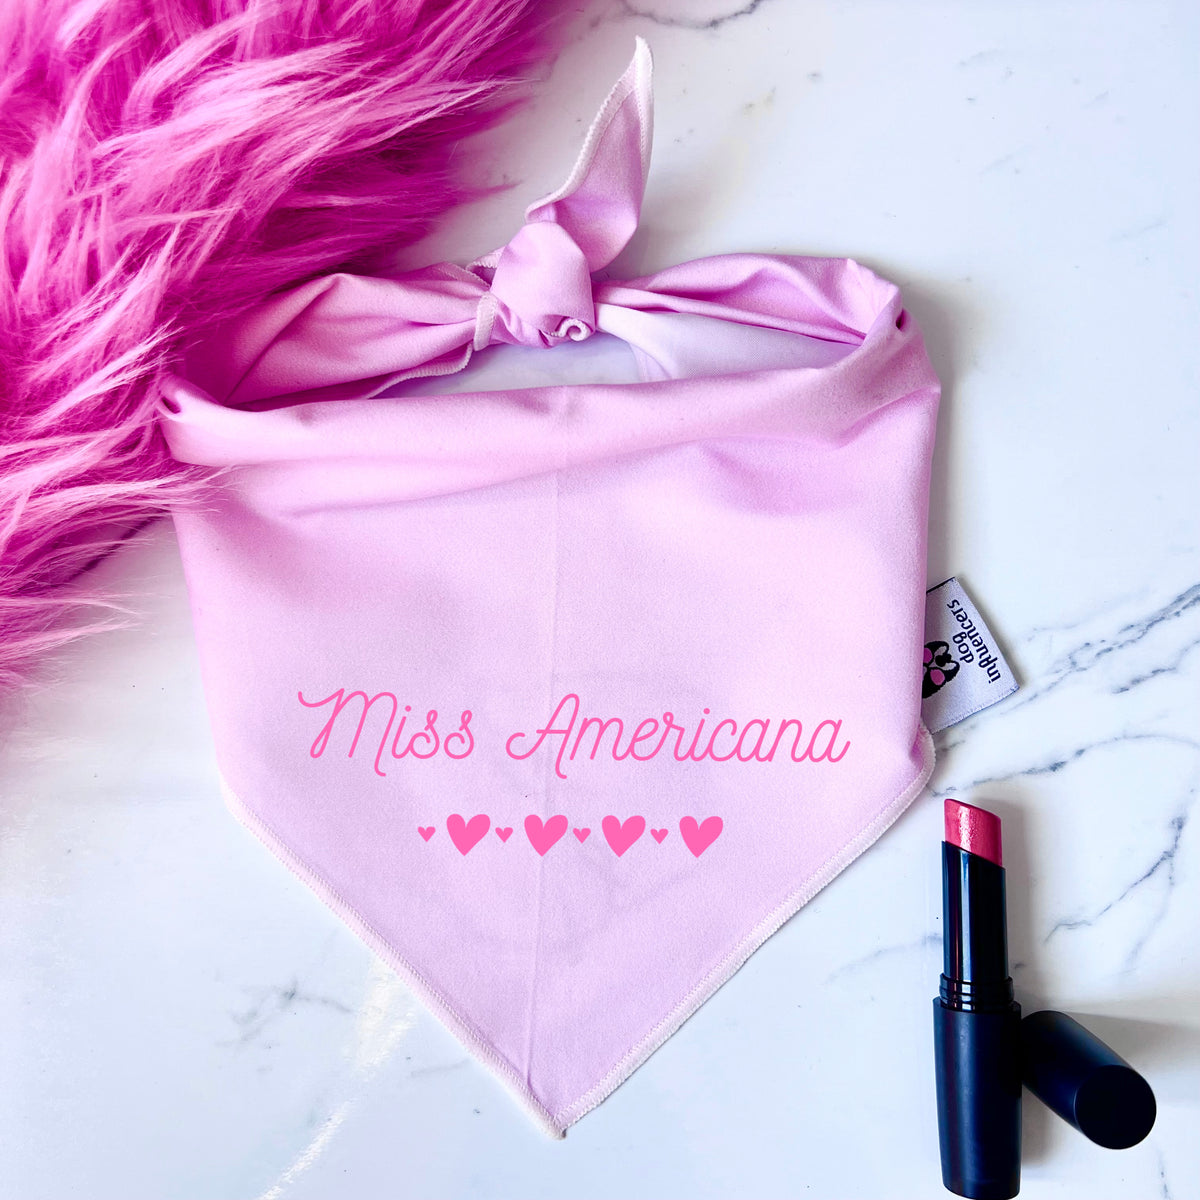 Taylor Swift Dog Bandana - Miss Americana - Inpired by the song "Miss Americana & the Heartbreak Prince"